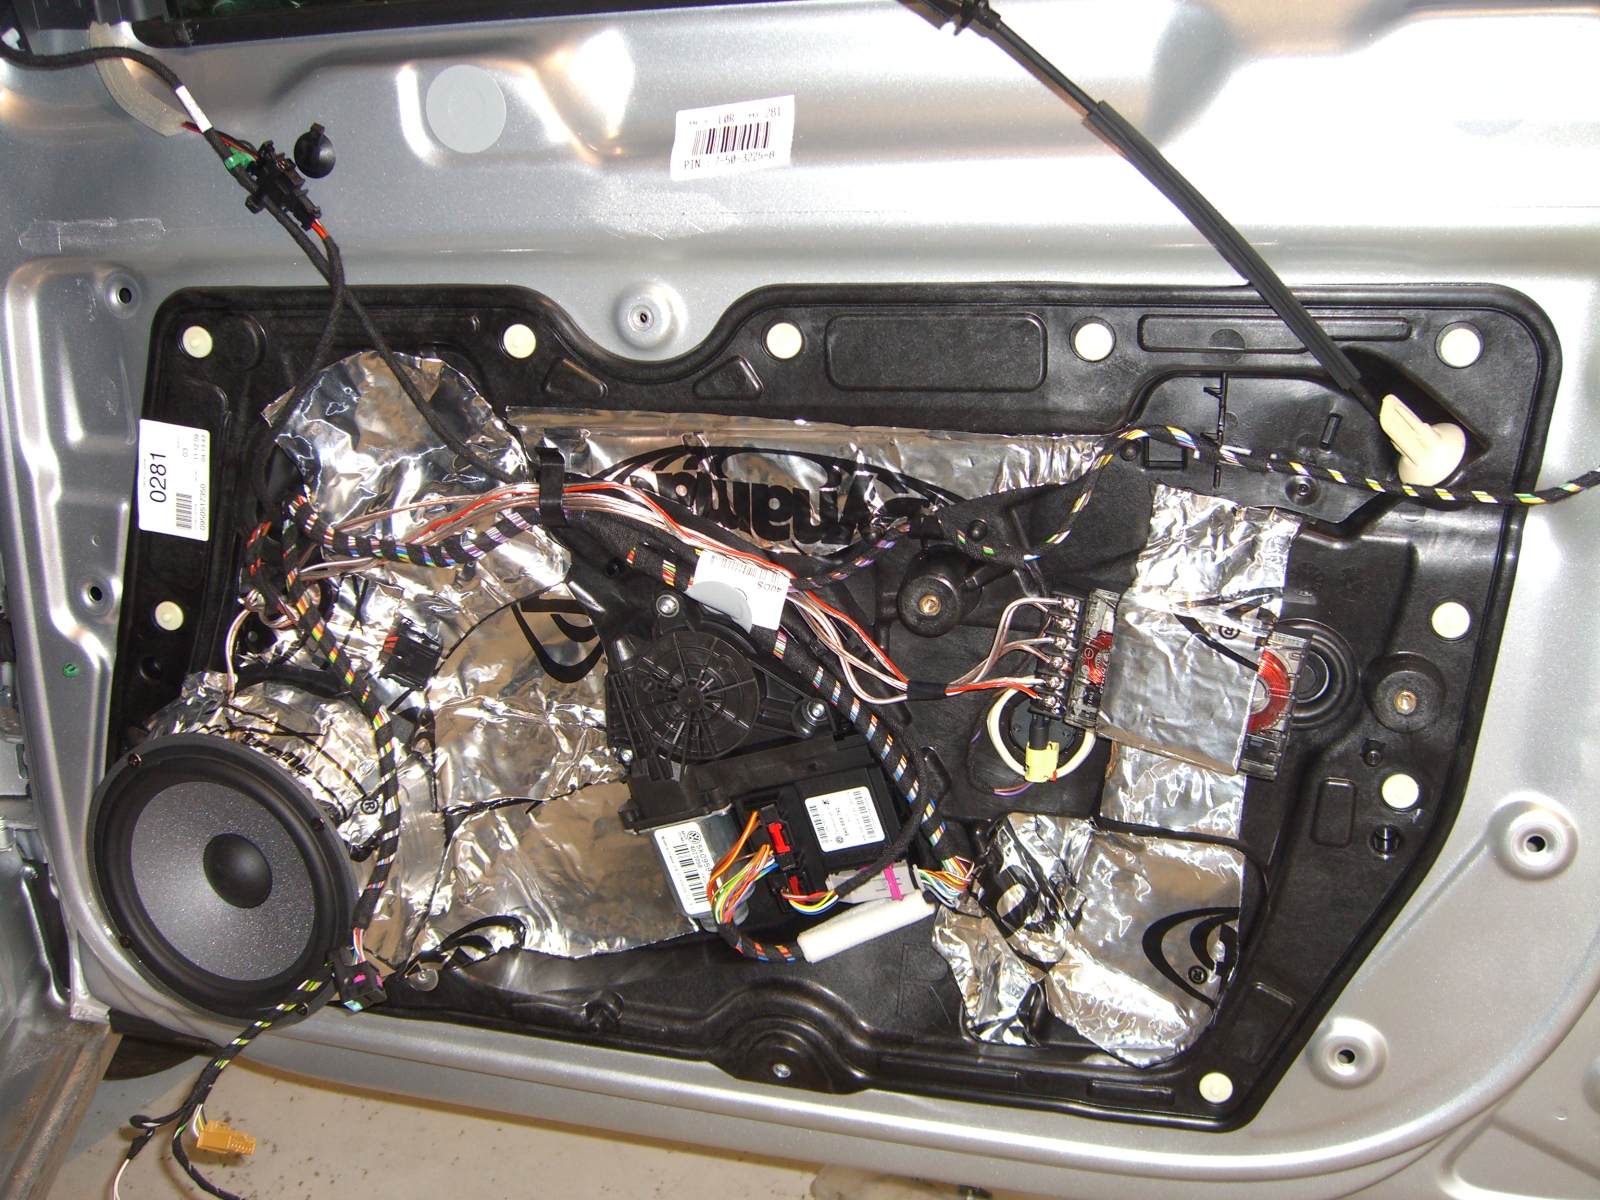 VW Golf GTI Focal speaker subwoofer install